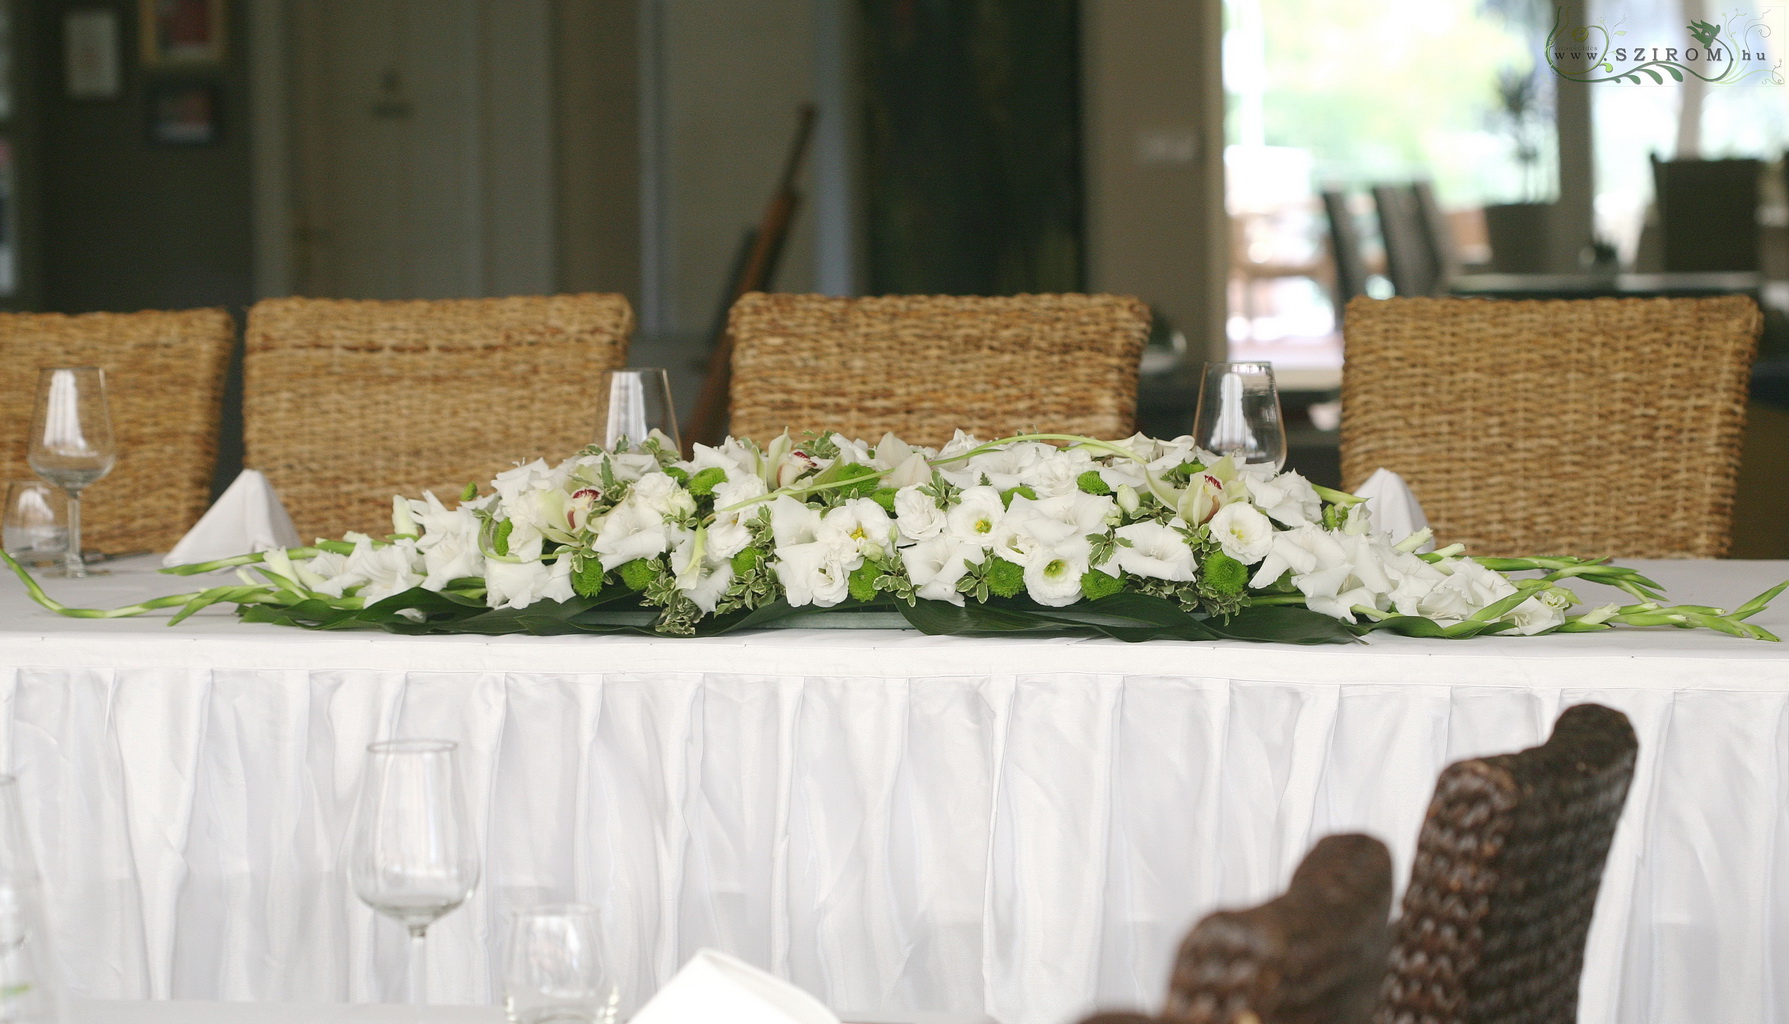 flower delivery Budapest - Main table centerpiece Hemingway restaurant (orchid, gladiolus, cala, button chrysanthemum, white, green), wedding